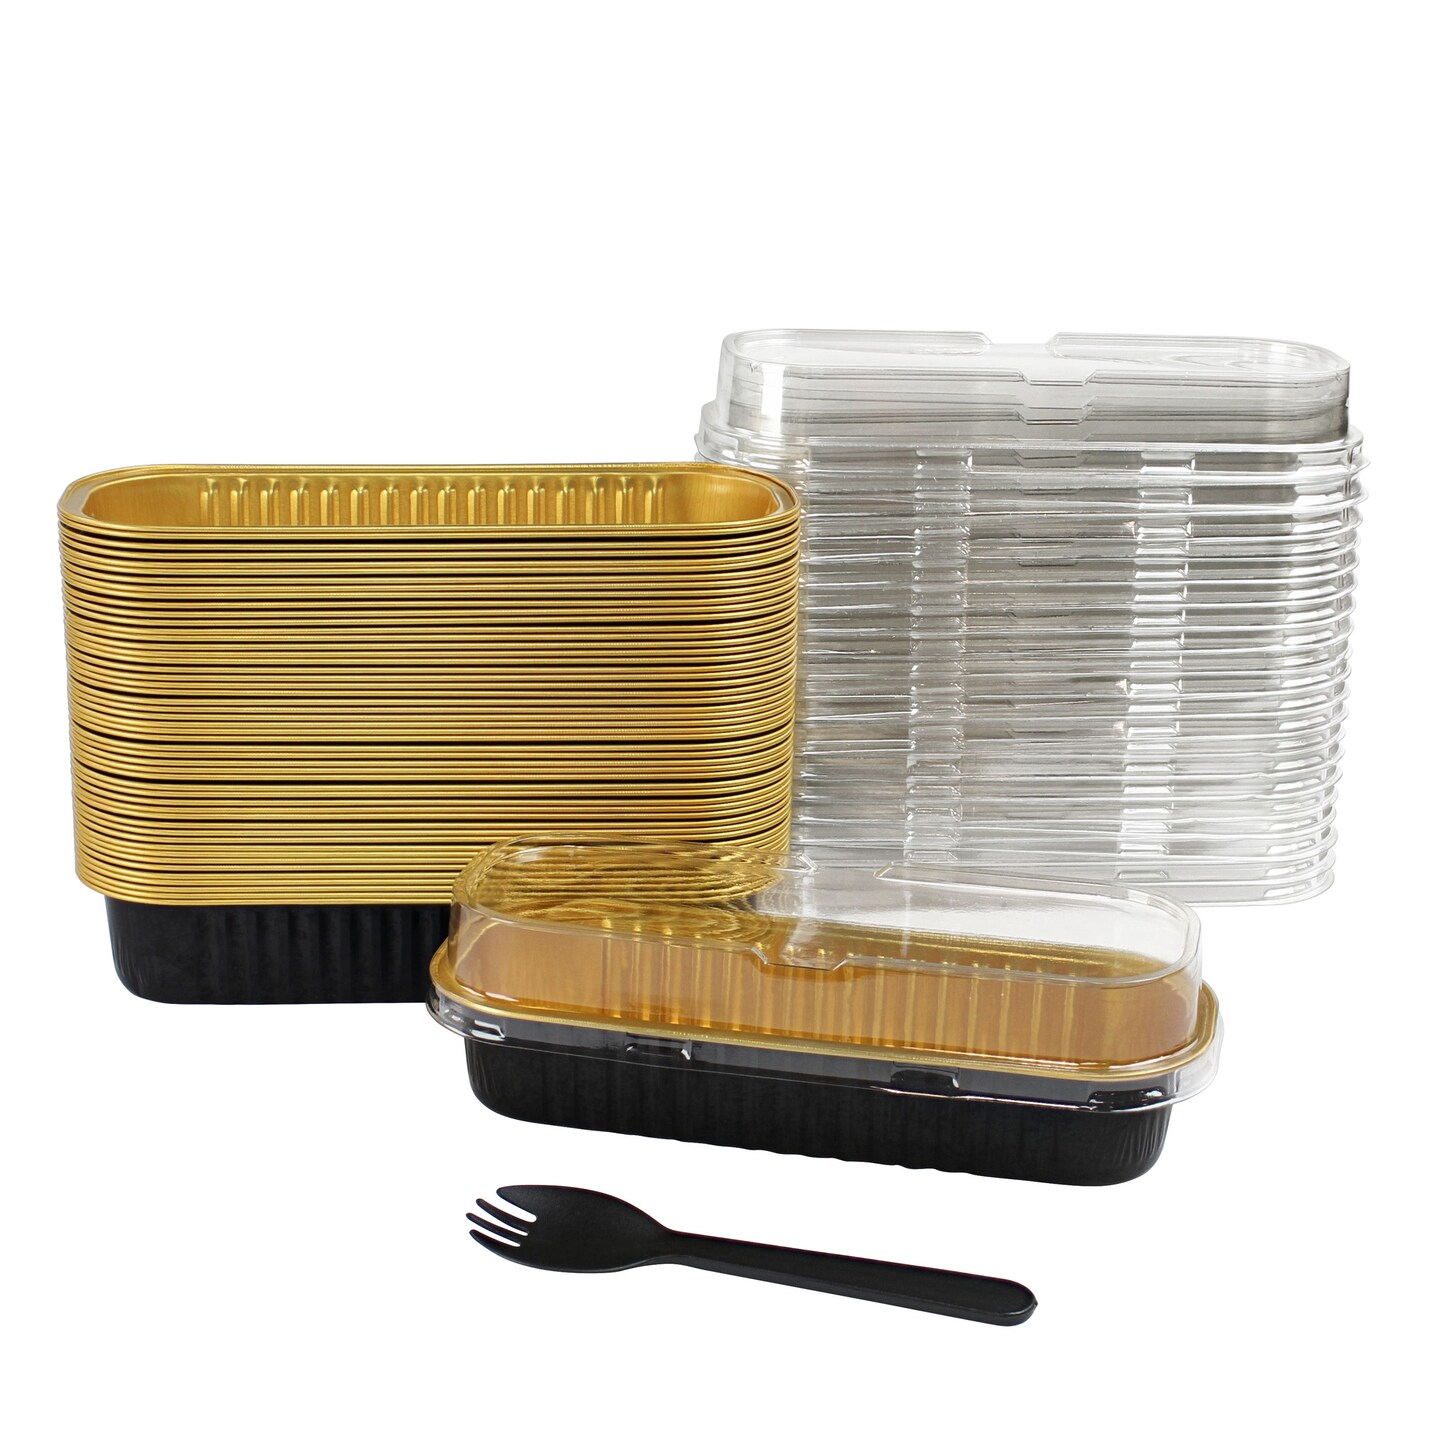 Spec101 Mini Loaf Pans with Lids and Spoons - Black 50pk Aluminum Baking Pans